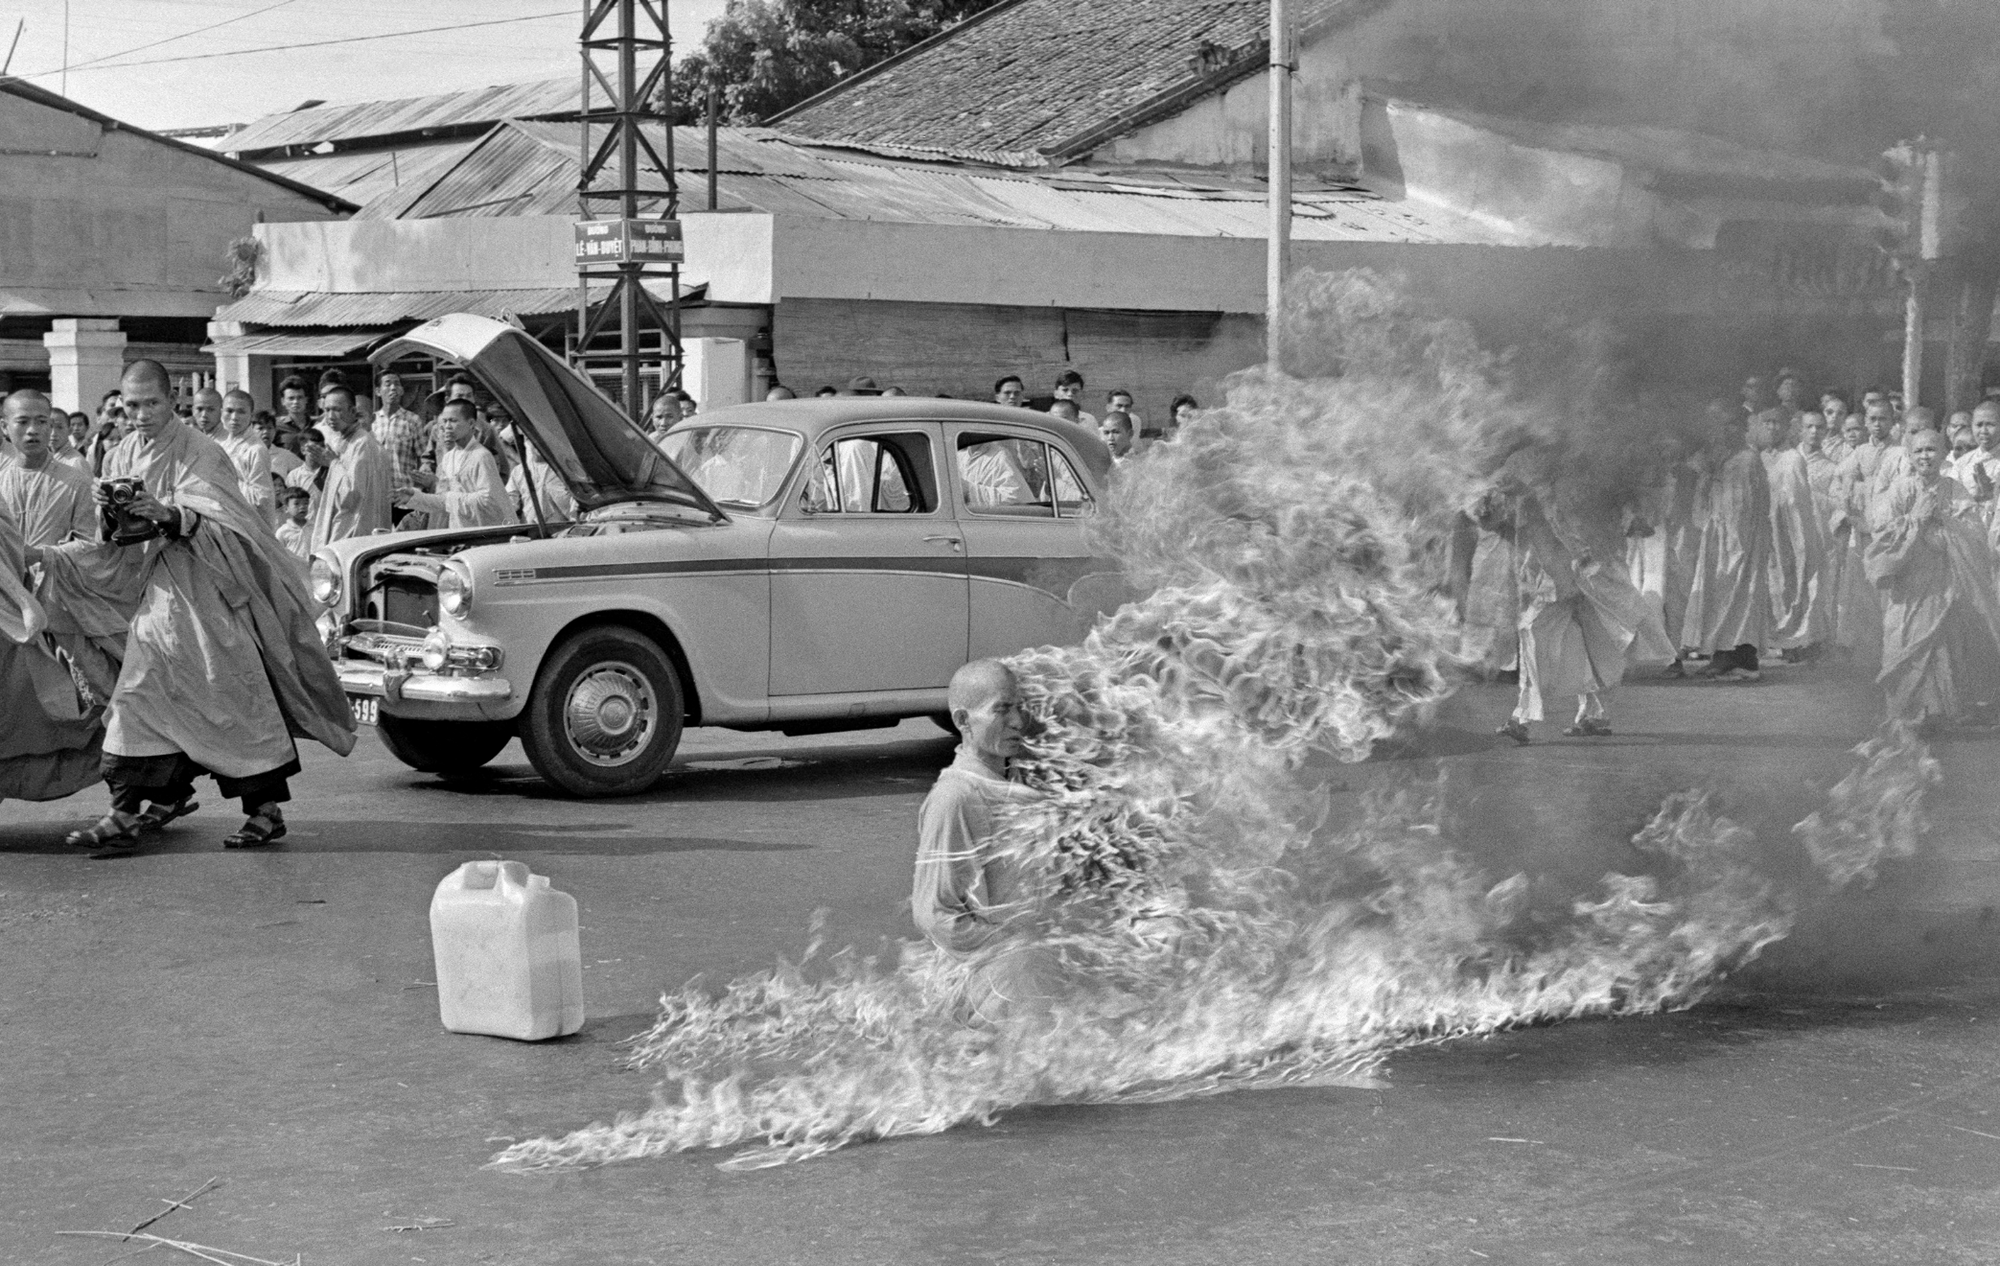 Vietnamese Buddhist monk Thích Quảng Đức's self-immolation during the Buddhist crisis in Vietnam (1963)